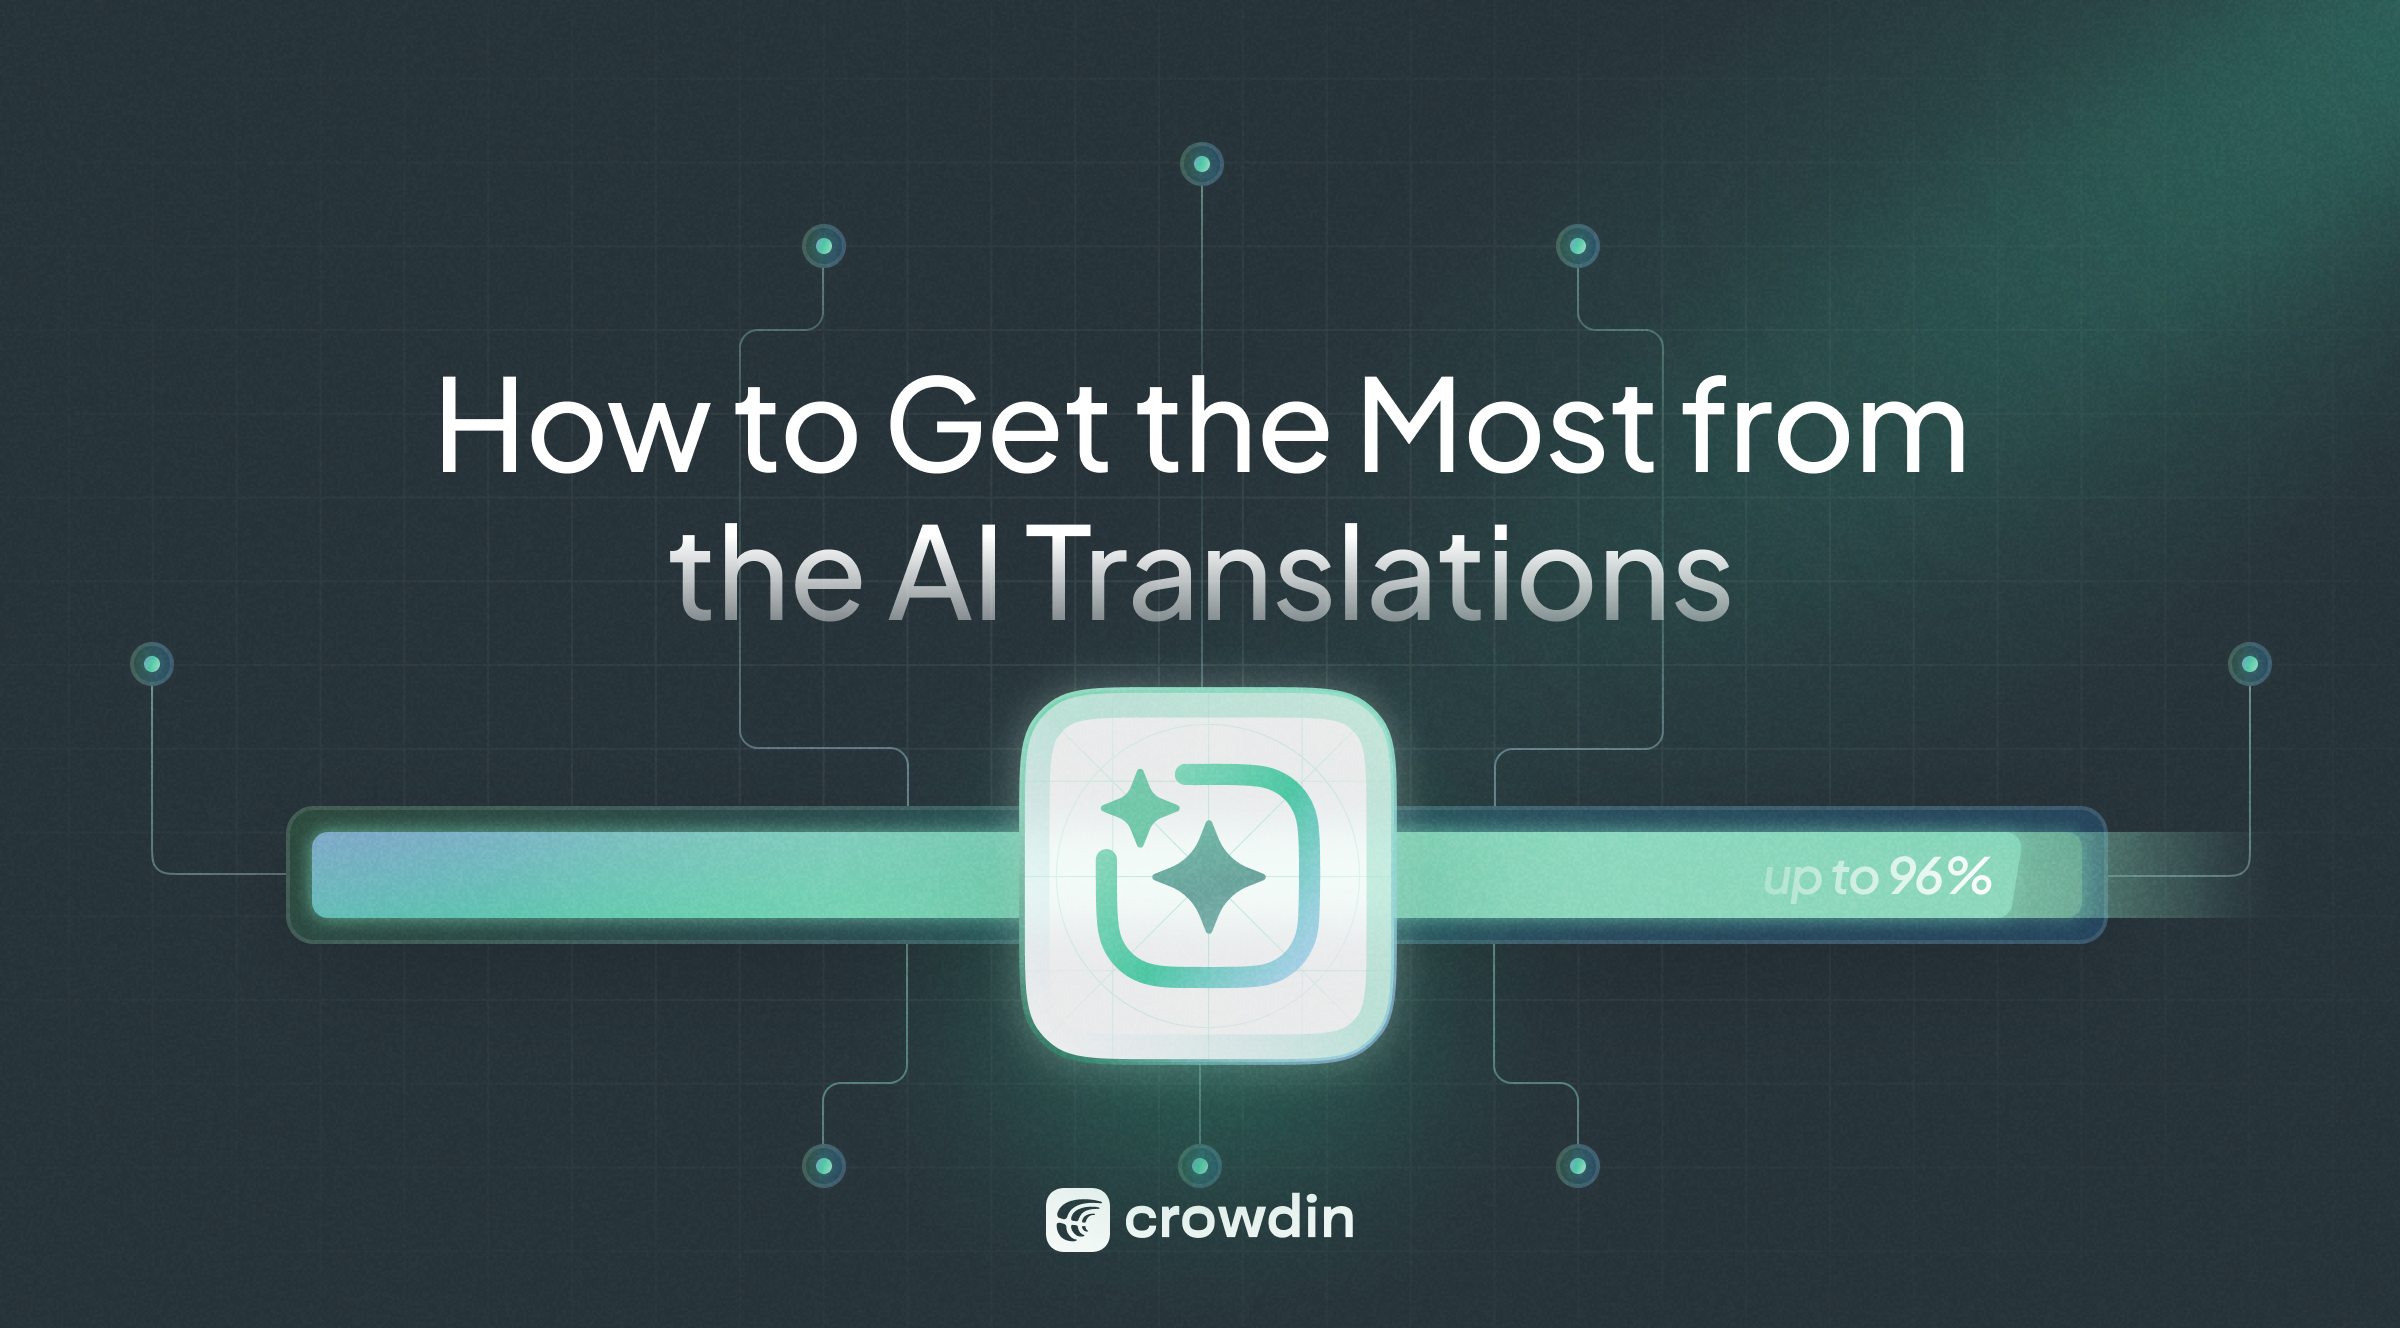 Crowdin localization platform AI Translation